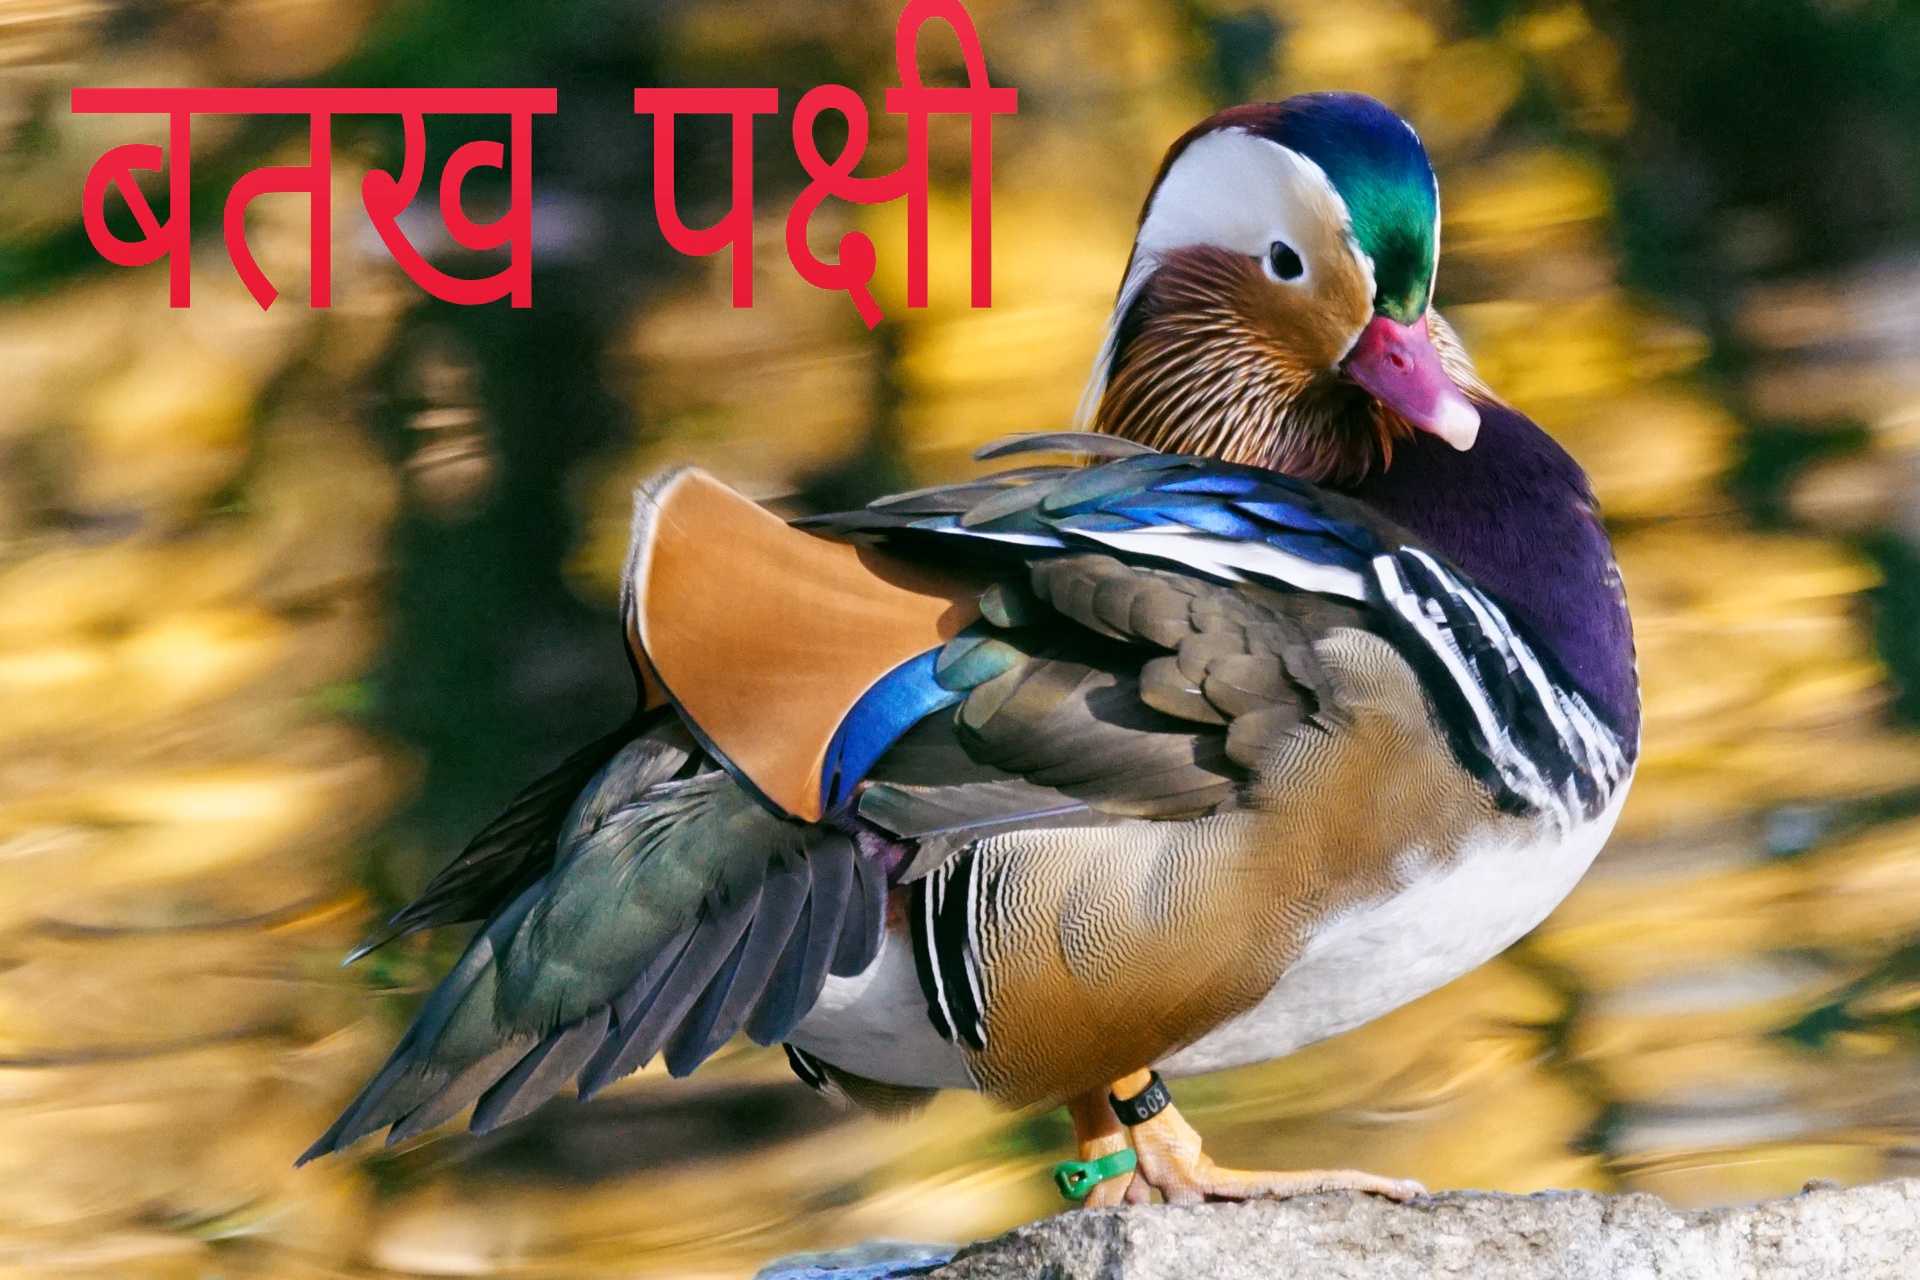 duck bird essay in hindi language